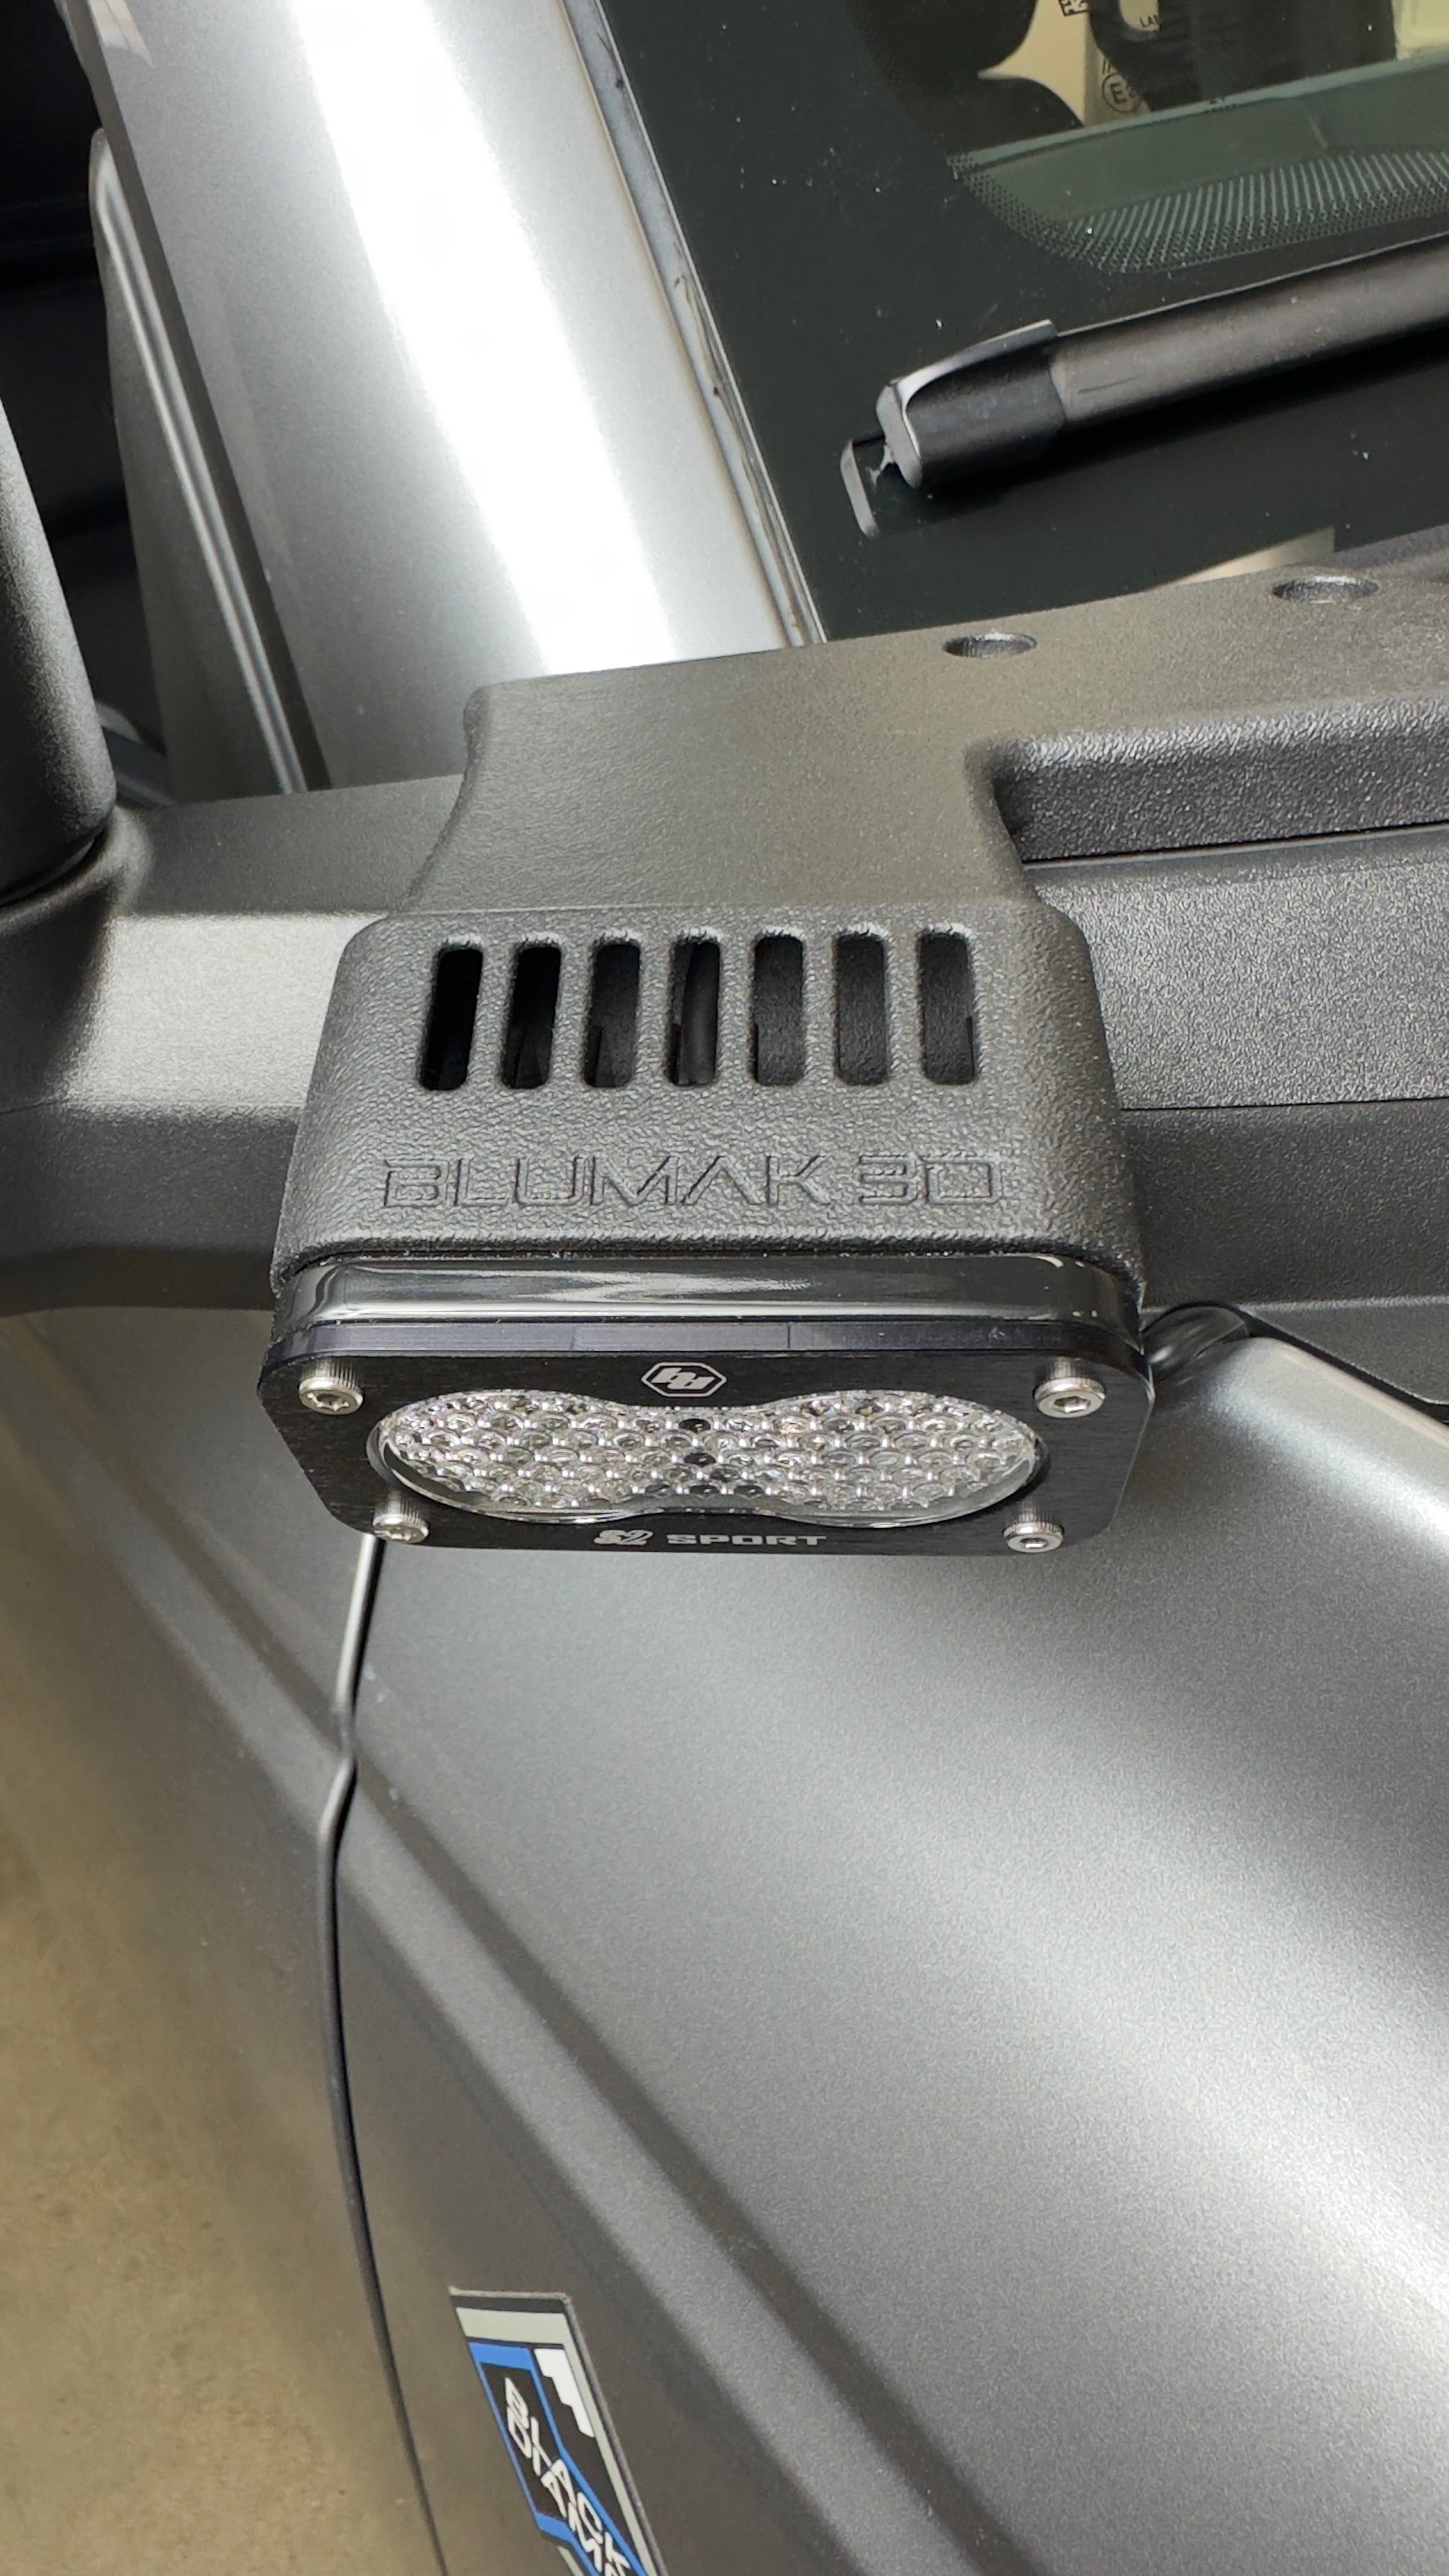 BluMak3D Adjustable LED Ditch Light Housings with Baja Designs S2 Sport LED Pods for Ford Bronco